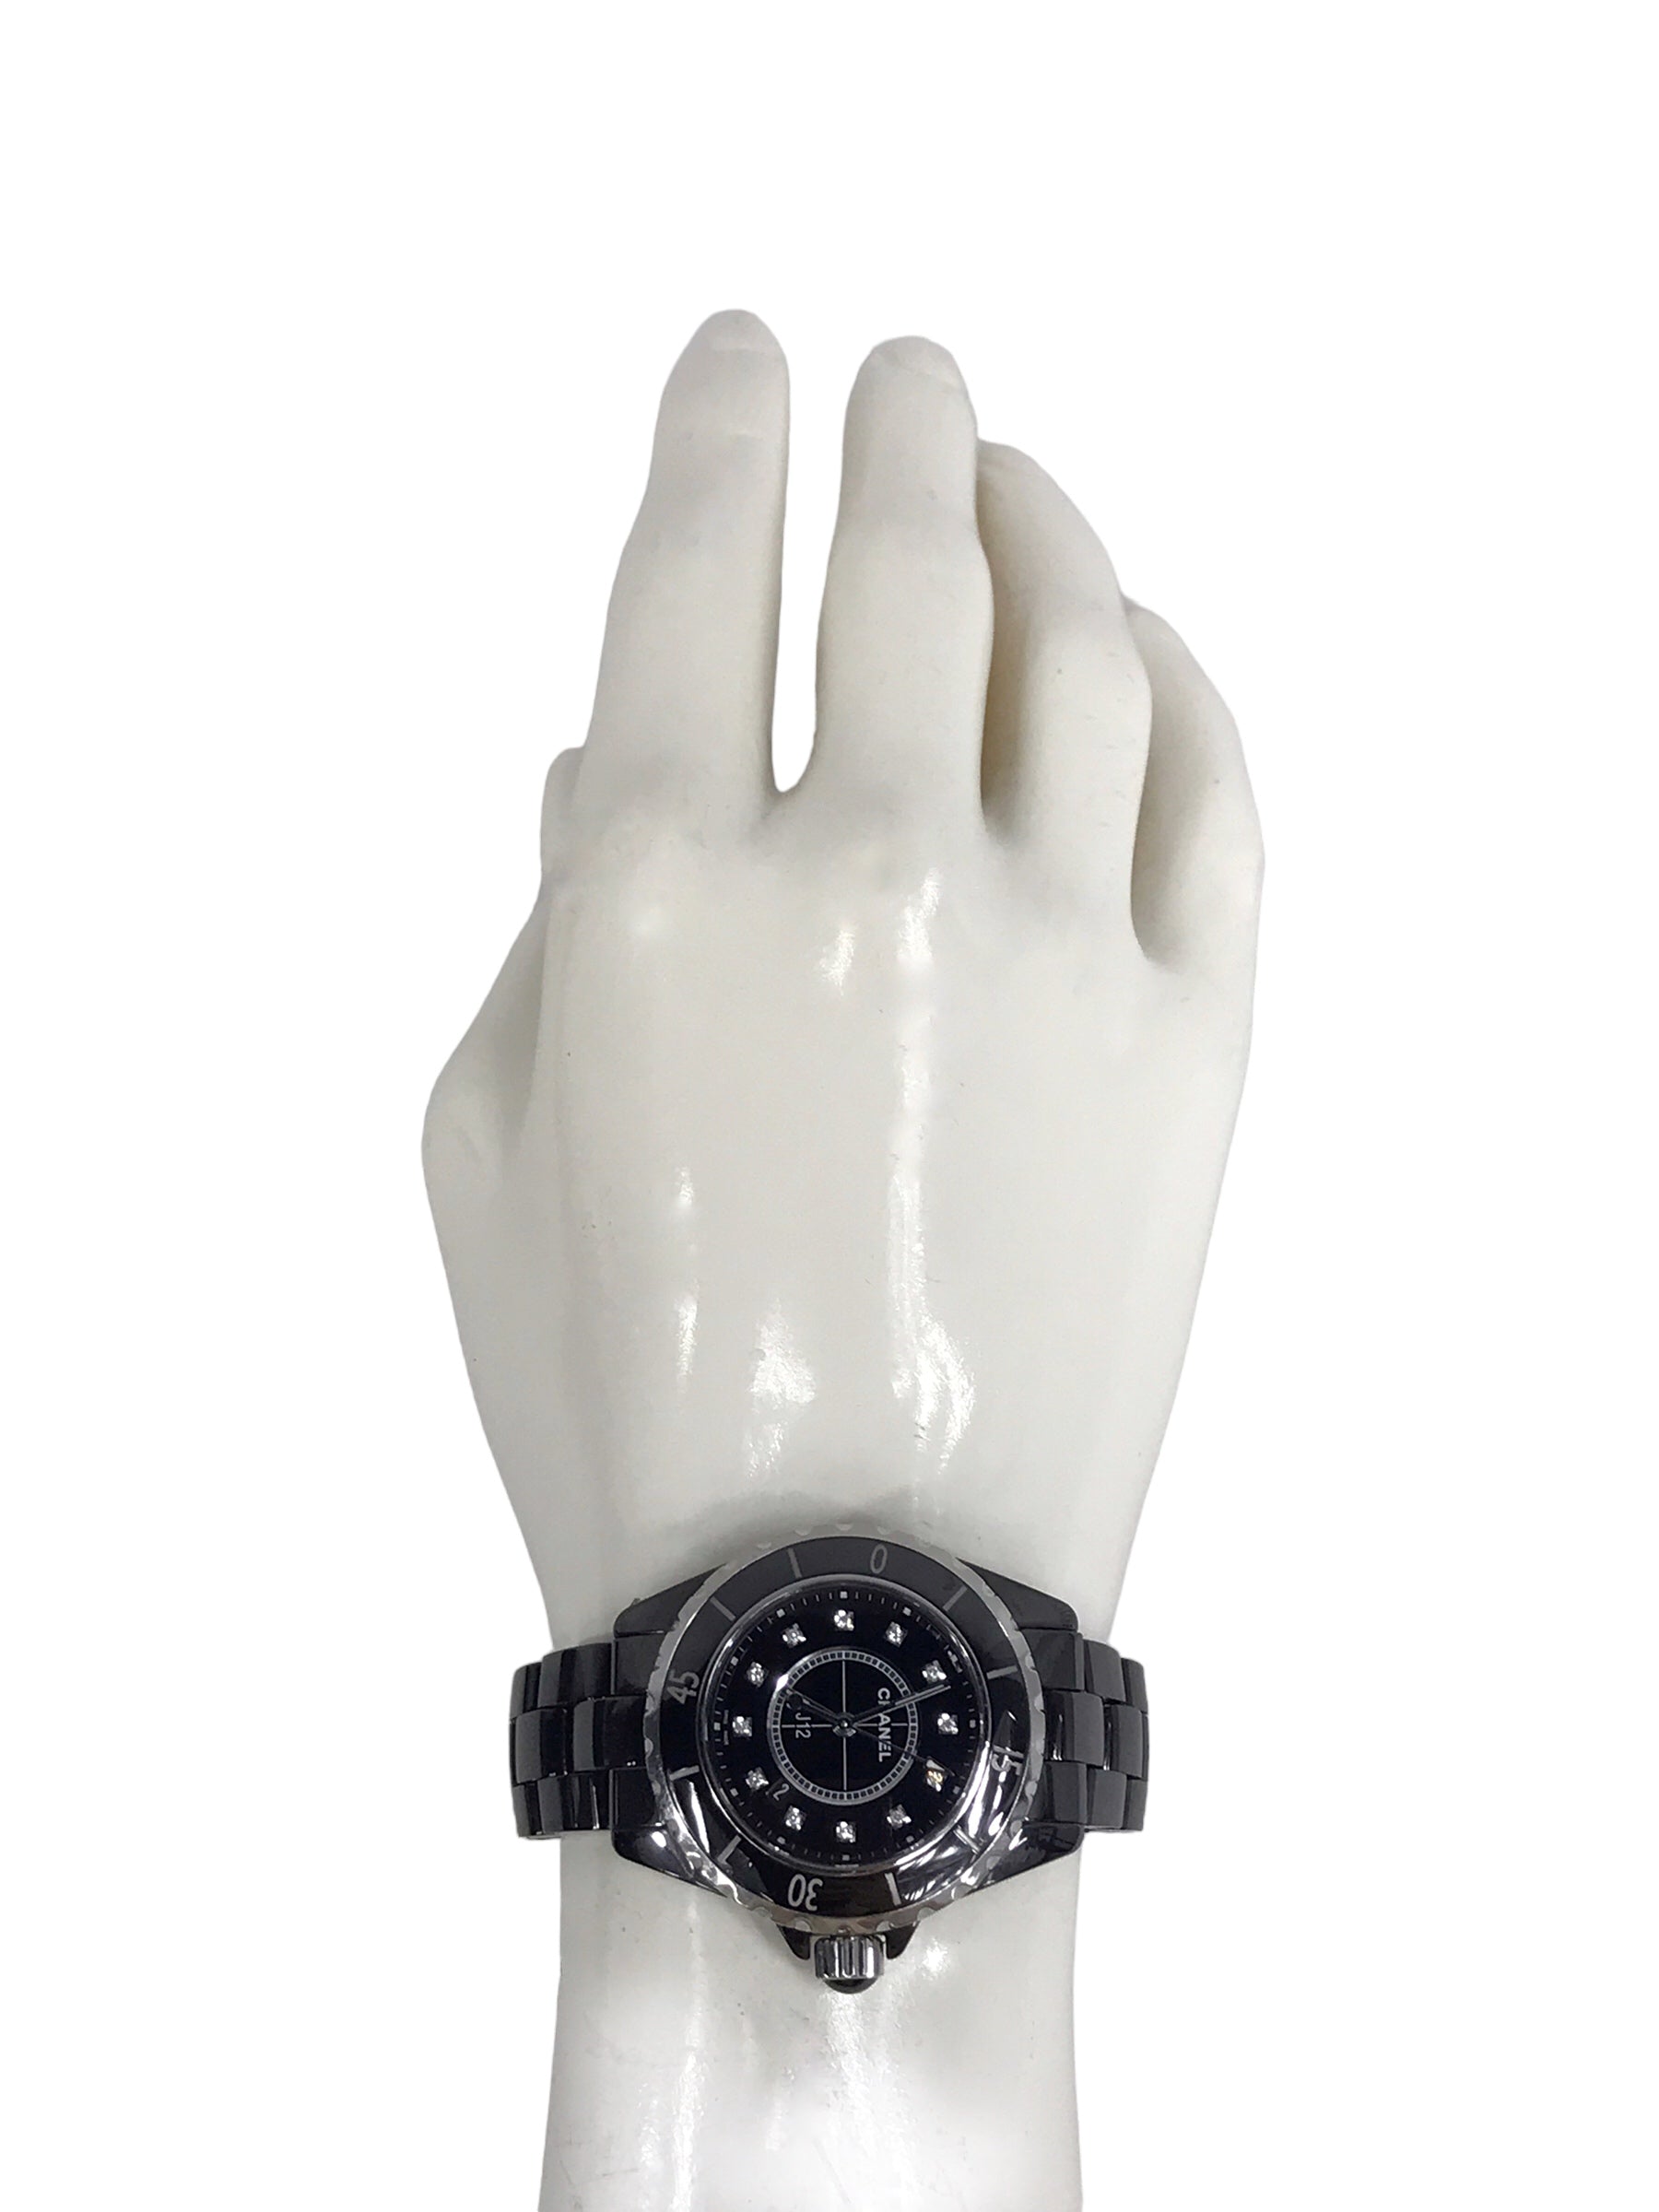 J12 Black Ceramic 33mm w/accent Diamond Watch